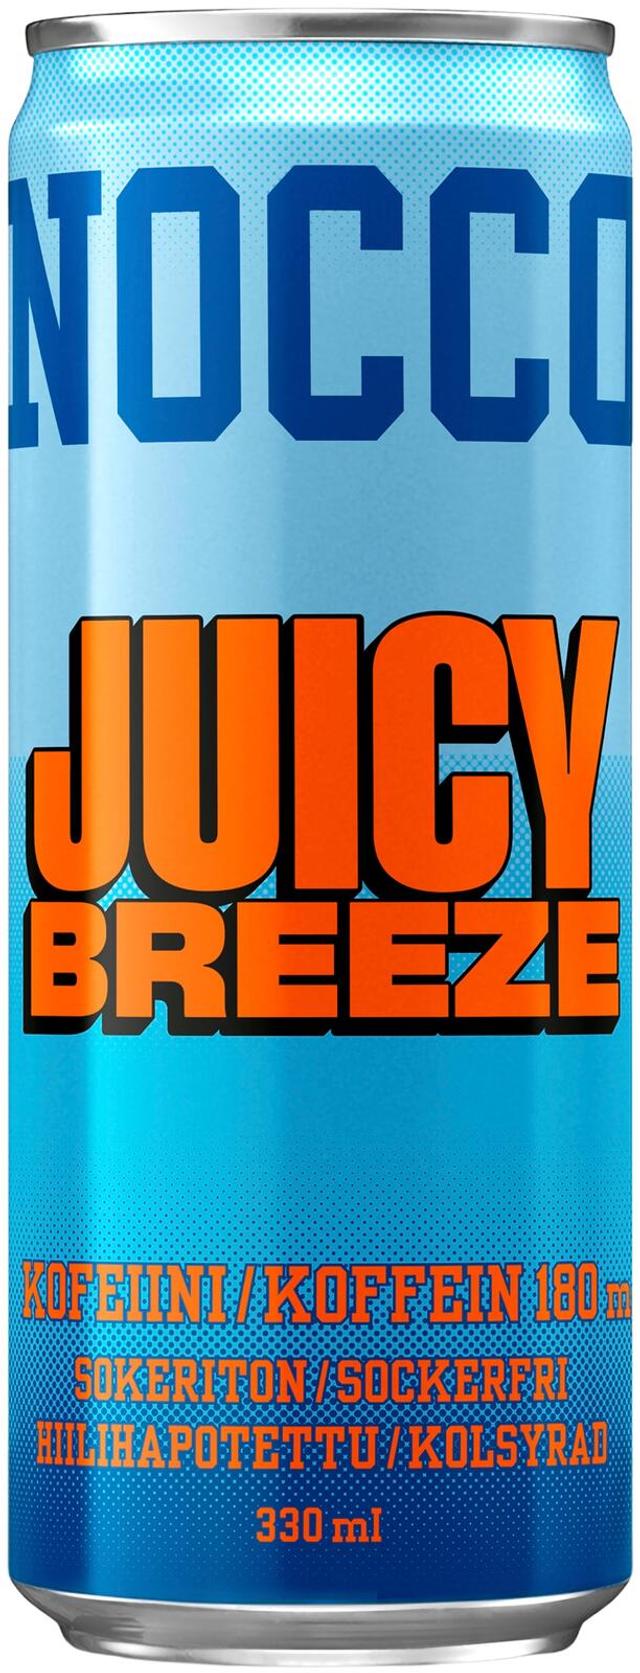 330ml NOCCO Juicy Breeze